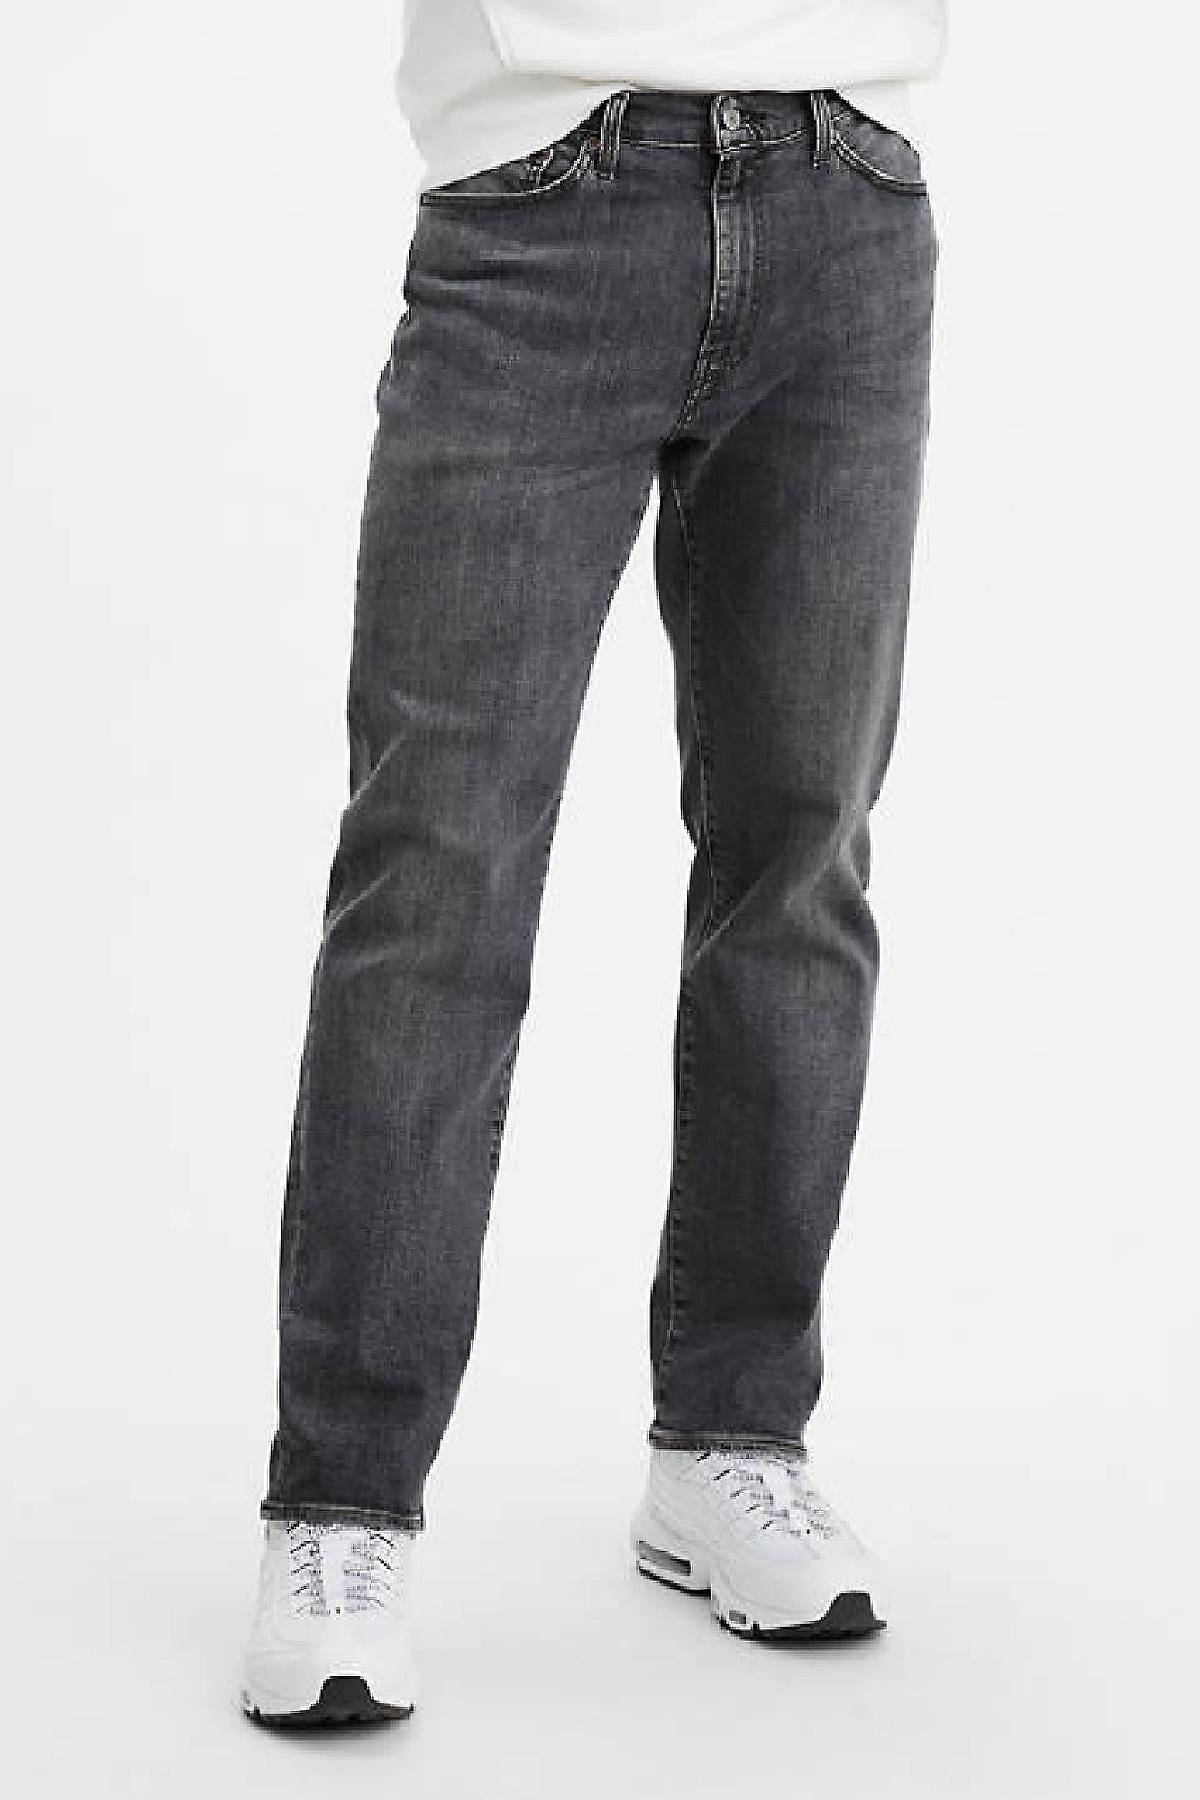 Model wearing 541™ Athletic Taper jeans